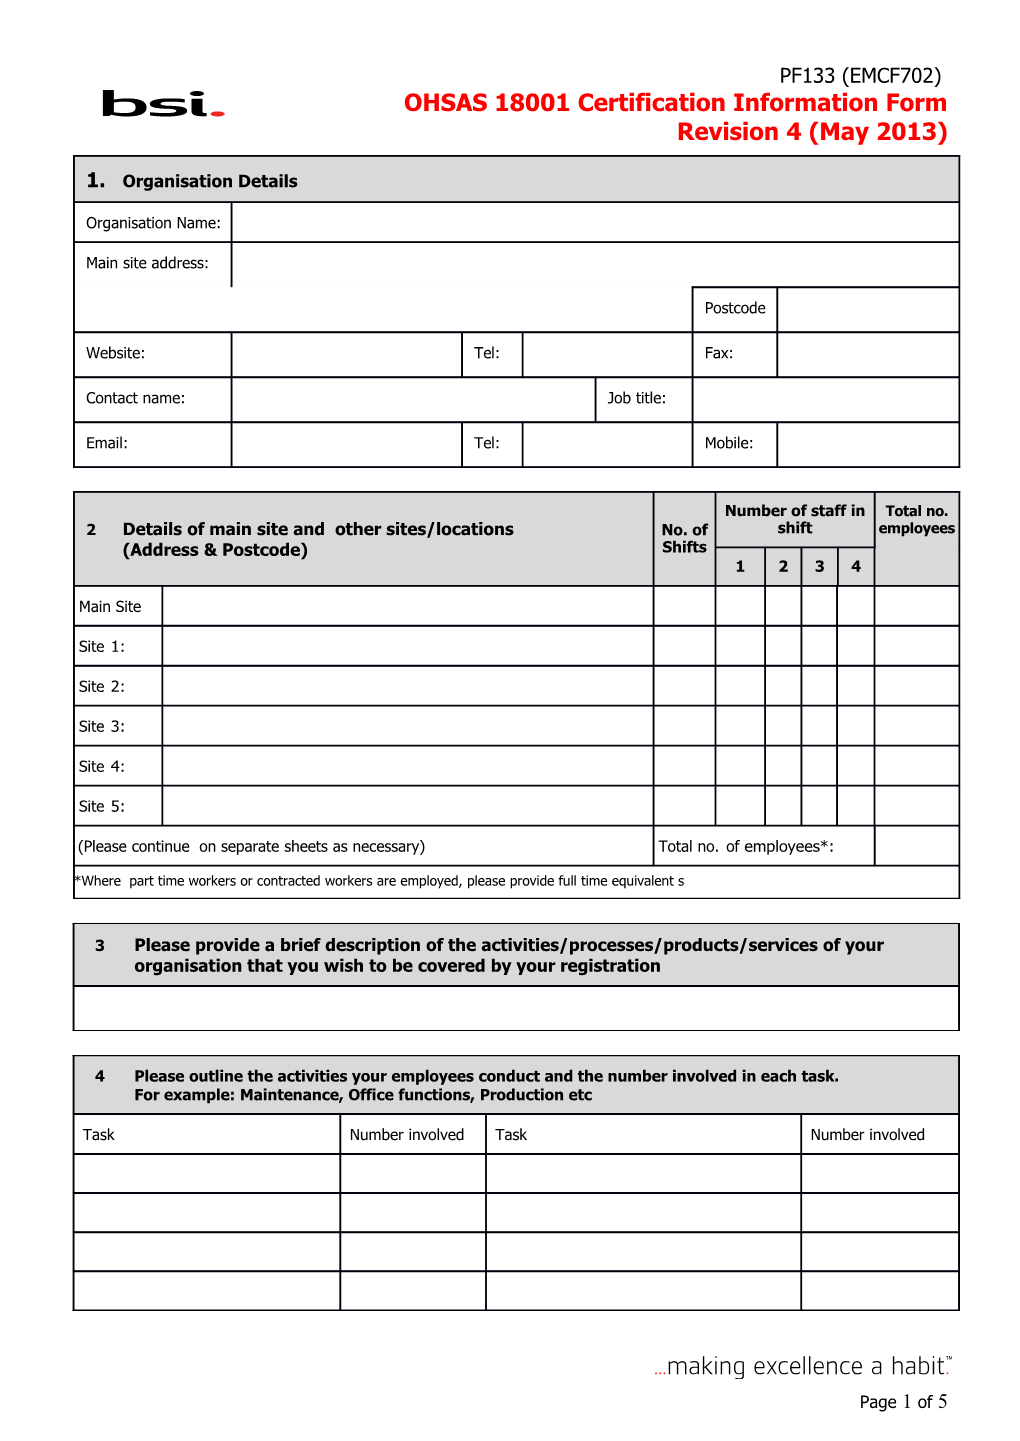 OHSAS 18001 Certification Information Request